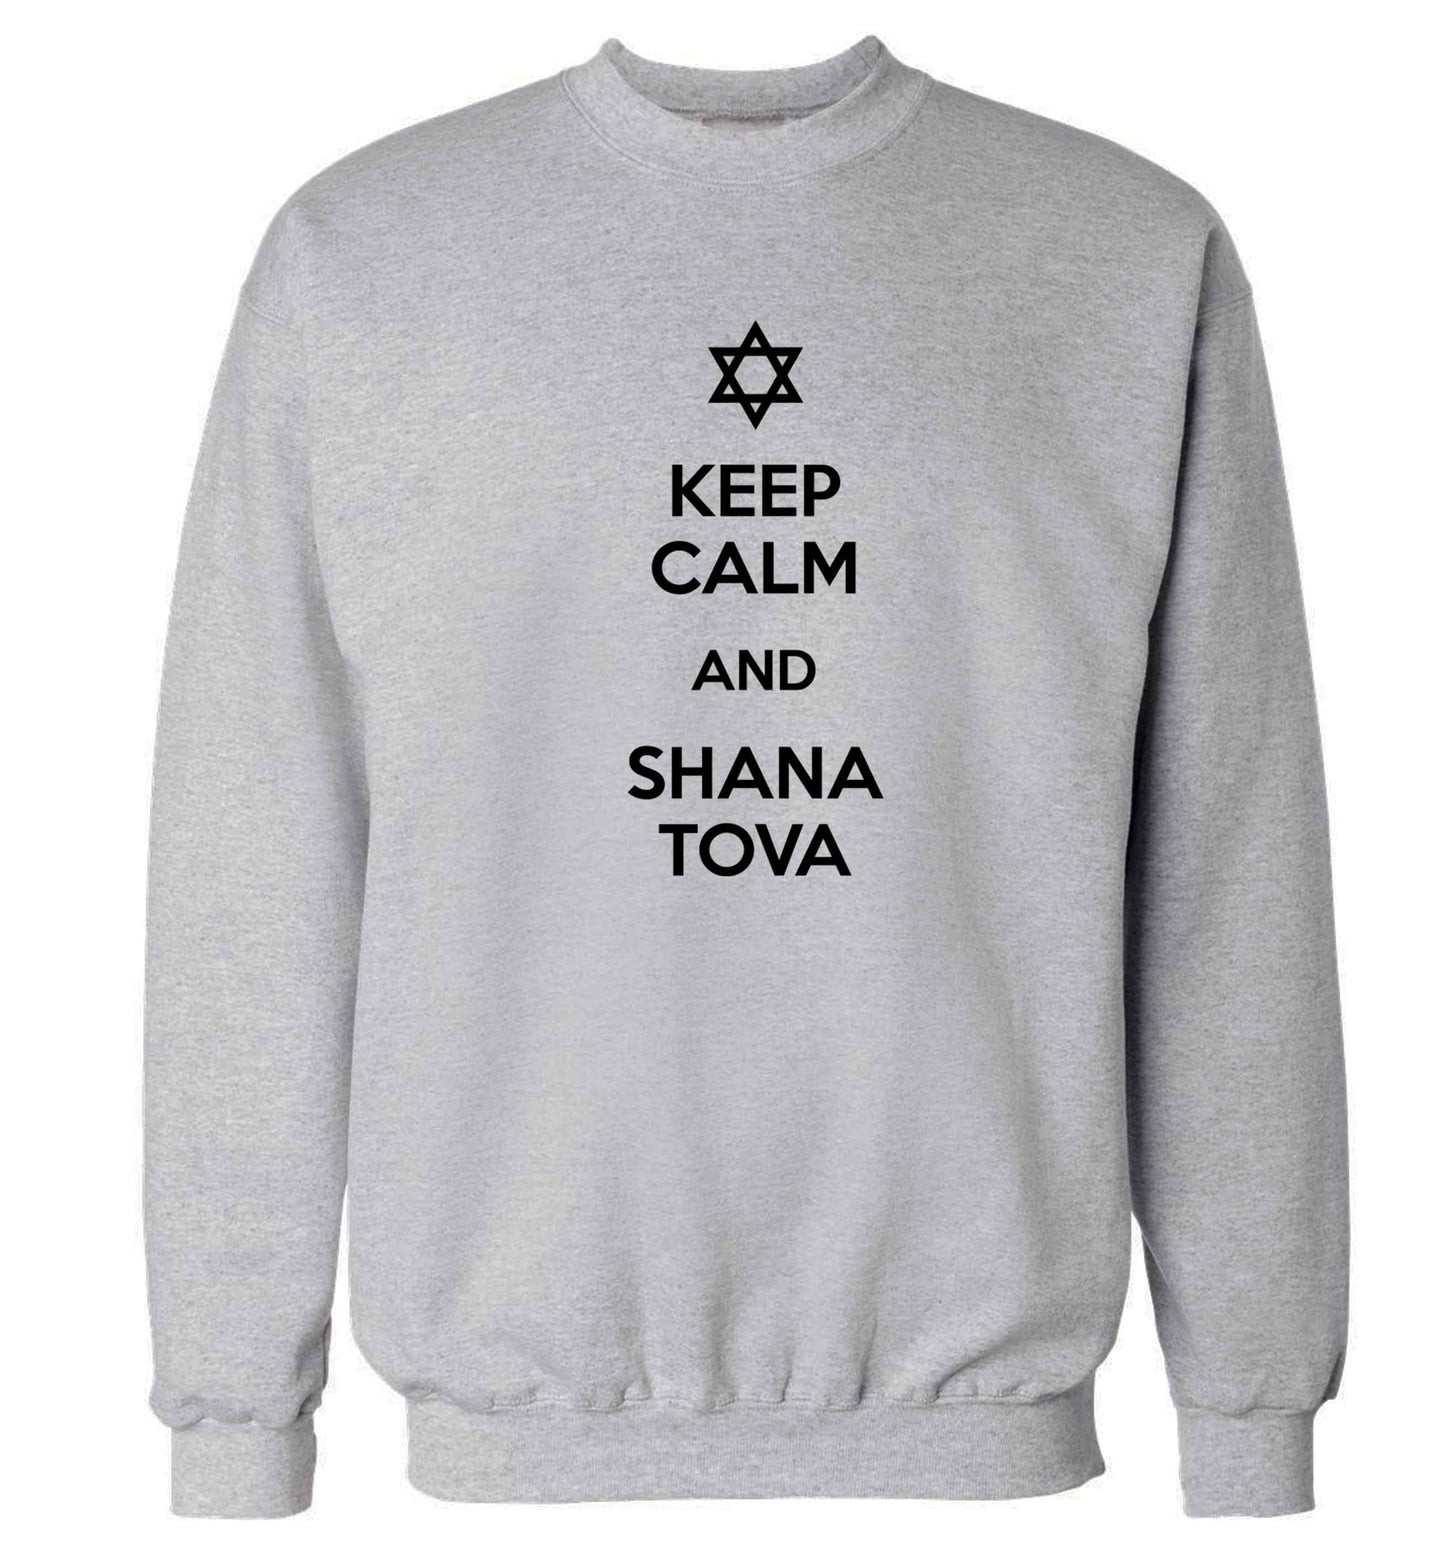 Keep calm and shana tova Adult's unisex grey Sweater 2XL